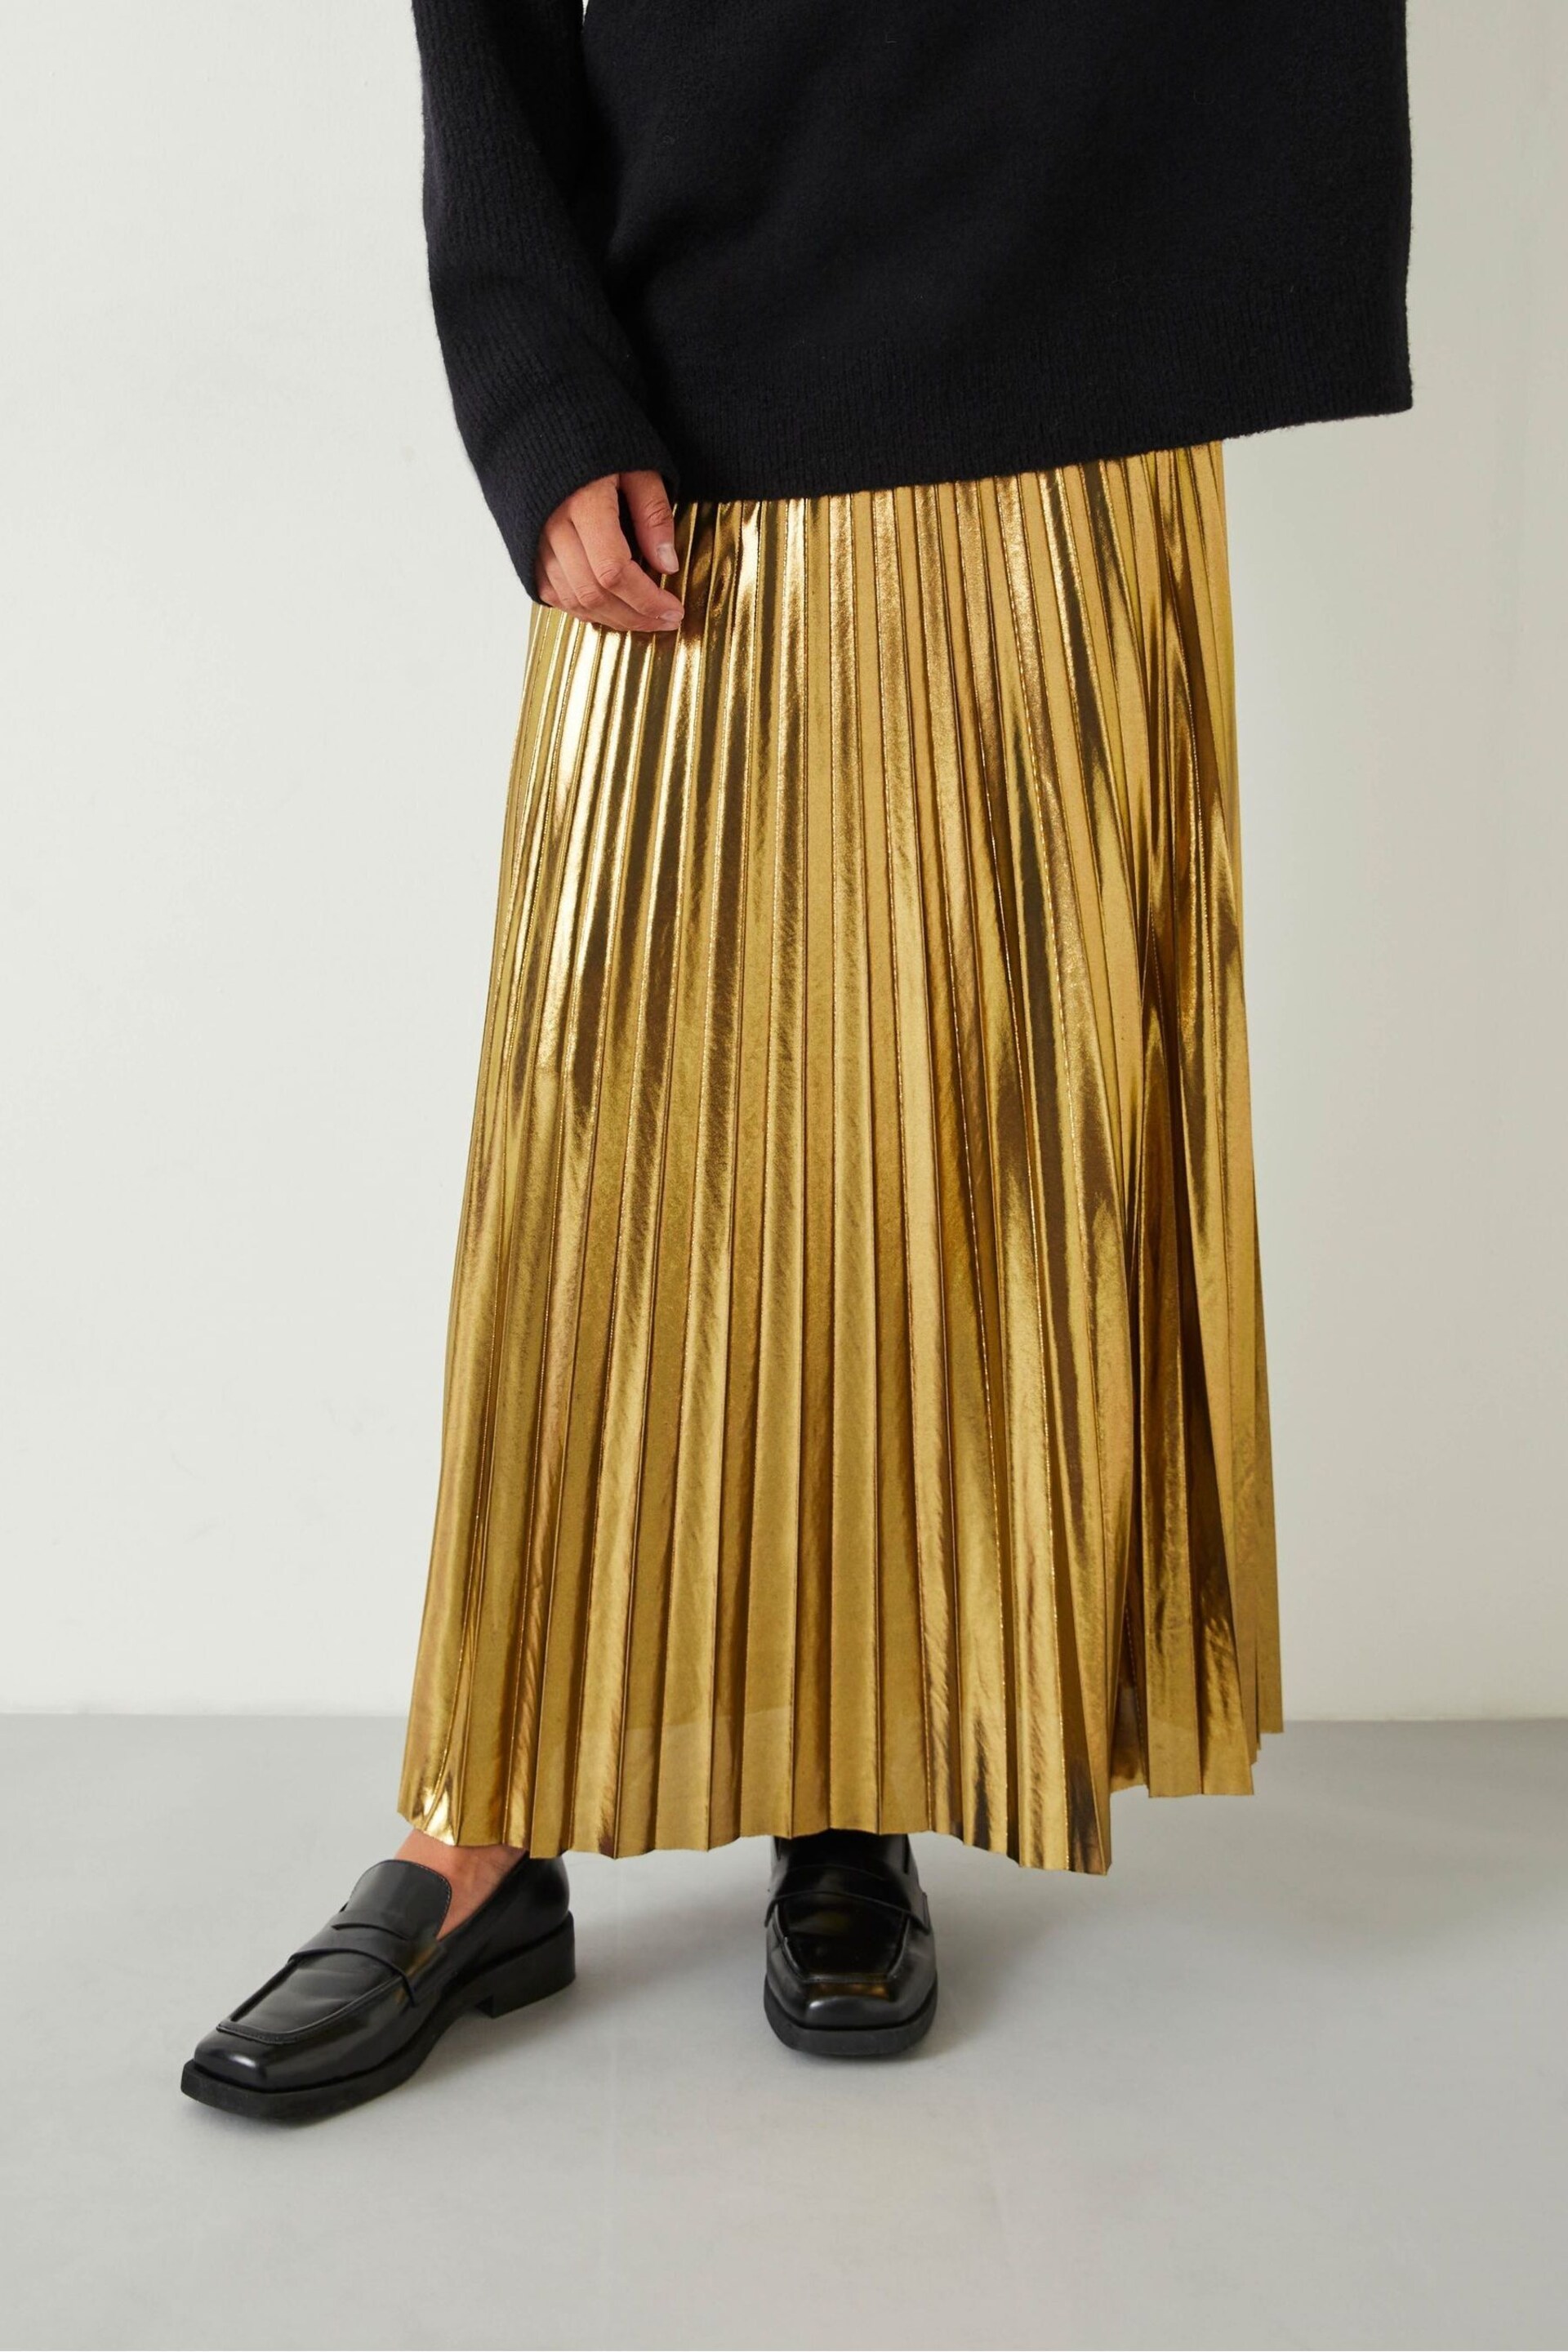 Hush Gold Raven Pleated Maxi Skirt - Image 2 of 5